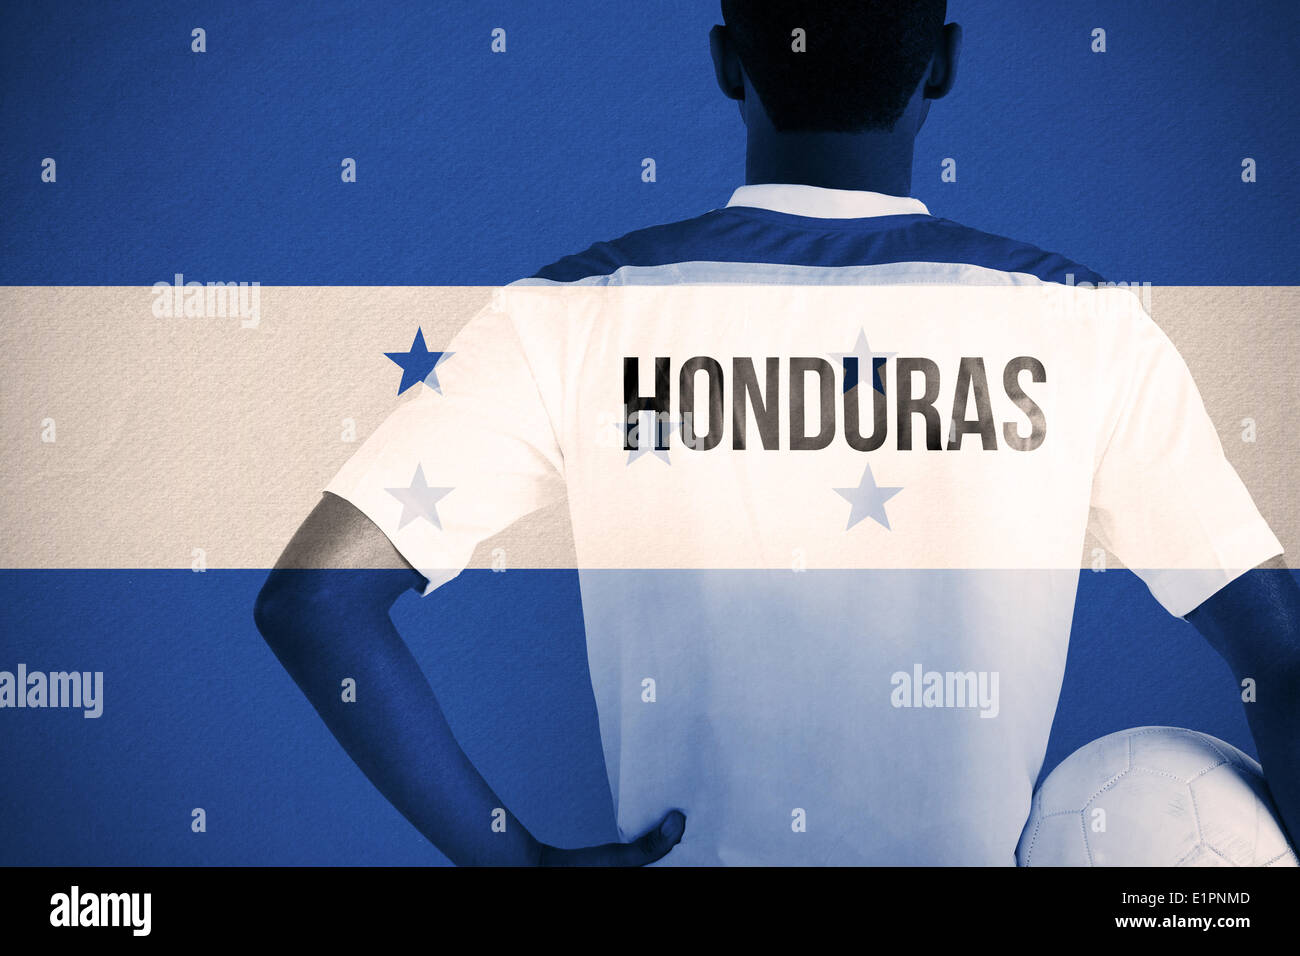 Composite image of honduras football player holding ball Stock Photo